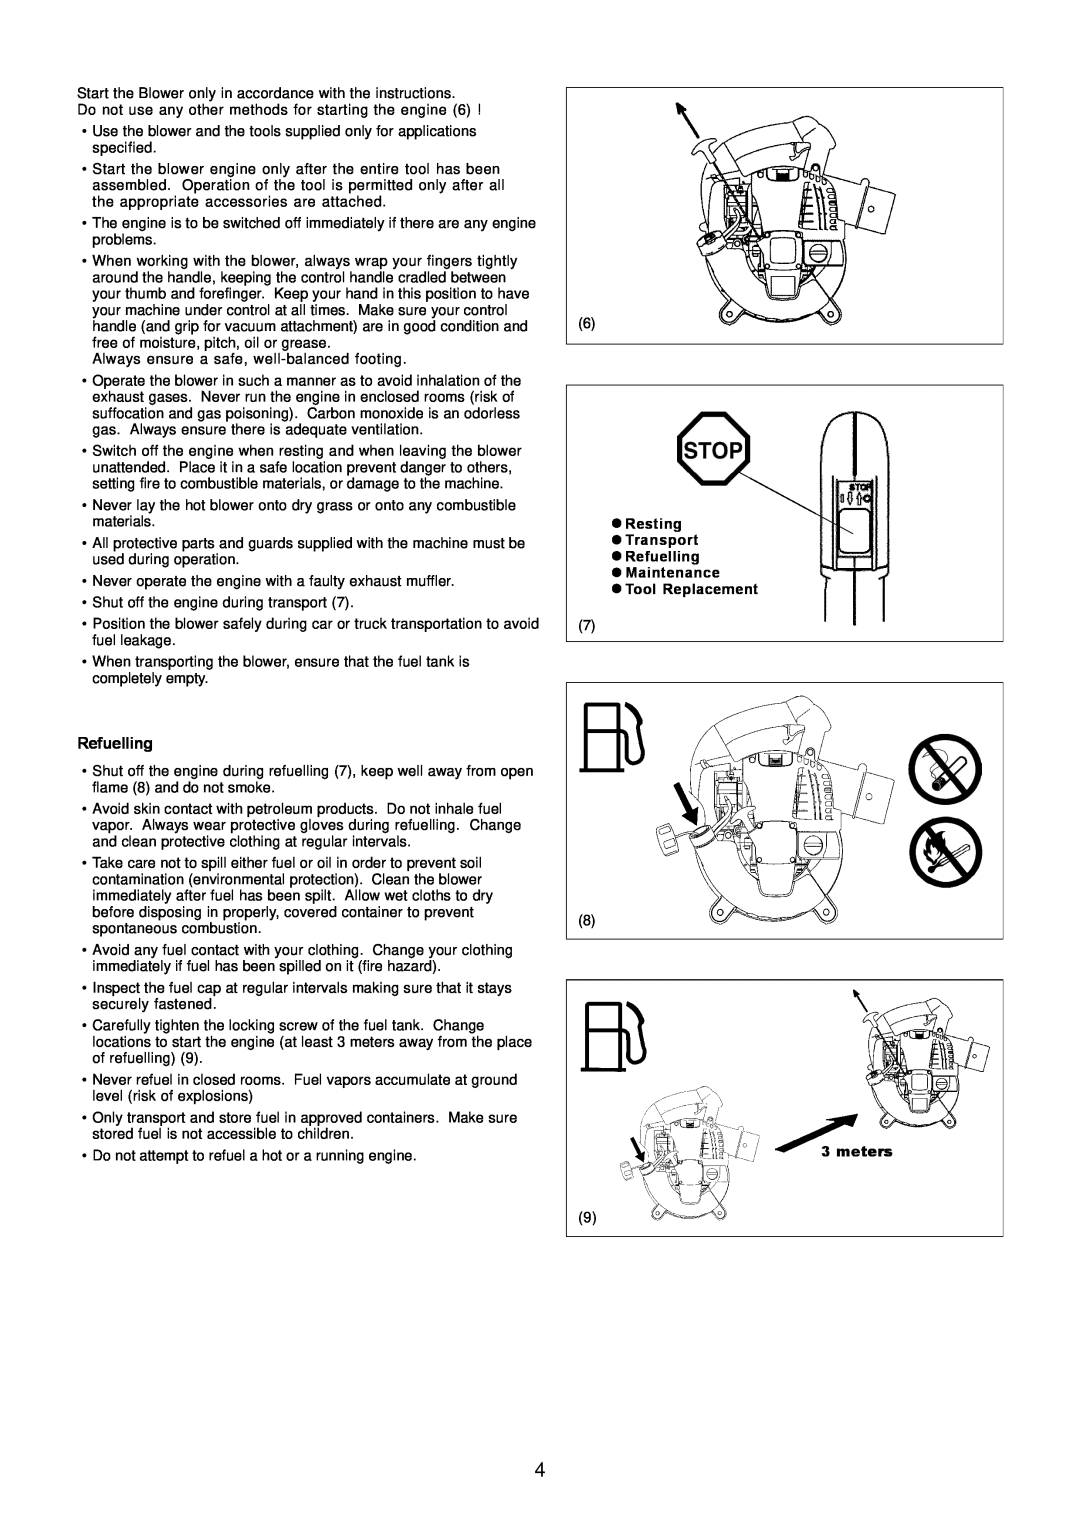 Dolmar PB-250.4 instruction manual Resting Transport Refuelling Maintenance Tool Replacement, meters 